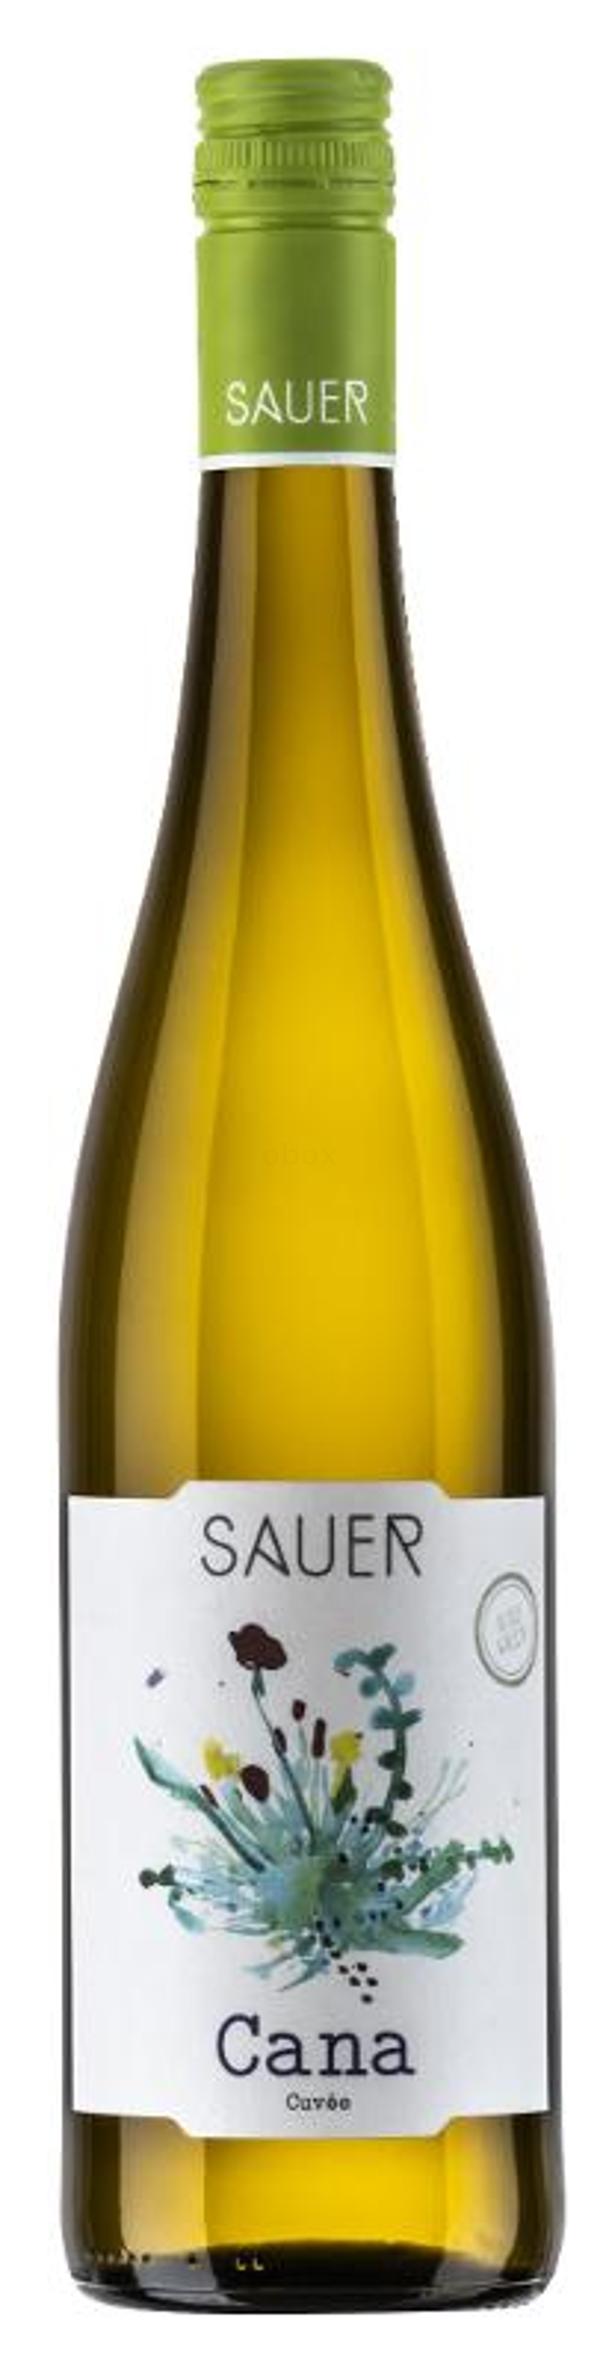 Produktfoto zu Cana Cuvée weiß, trocken, Weingut Sauer, 0,75l